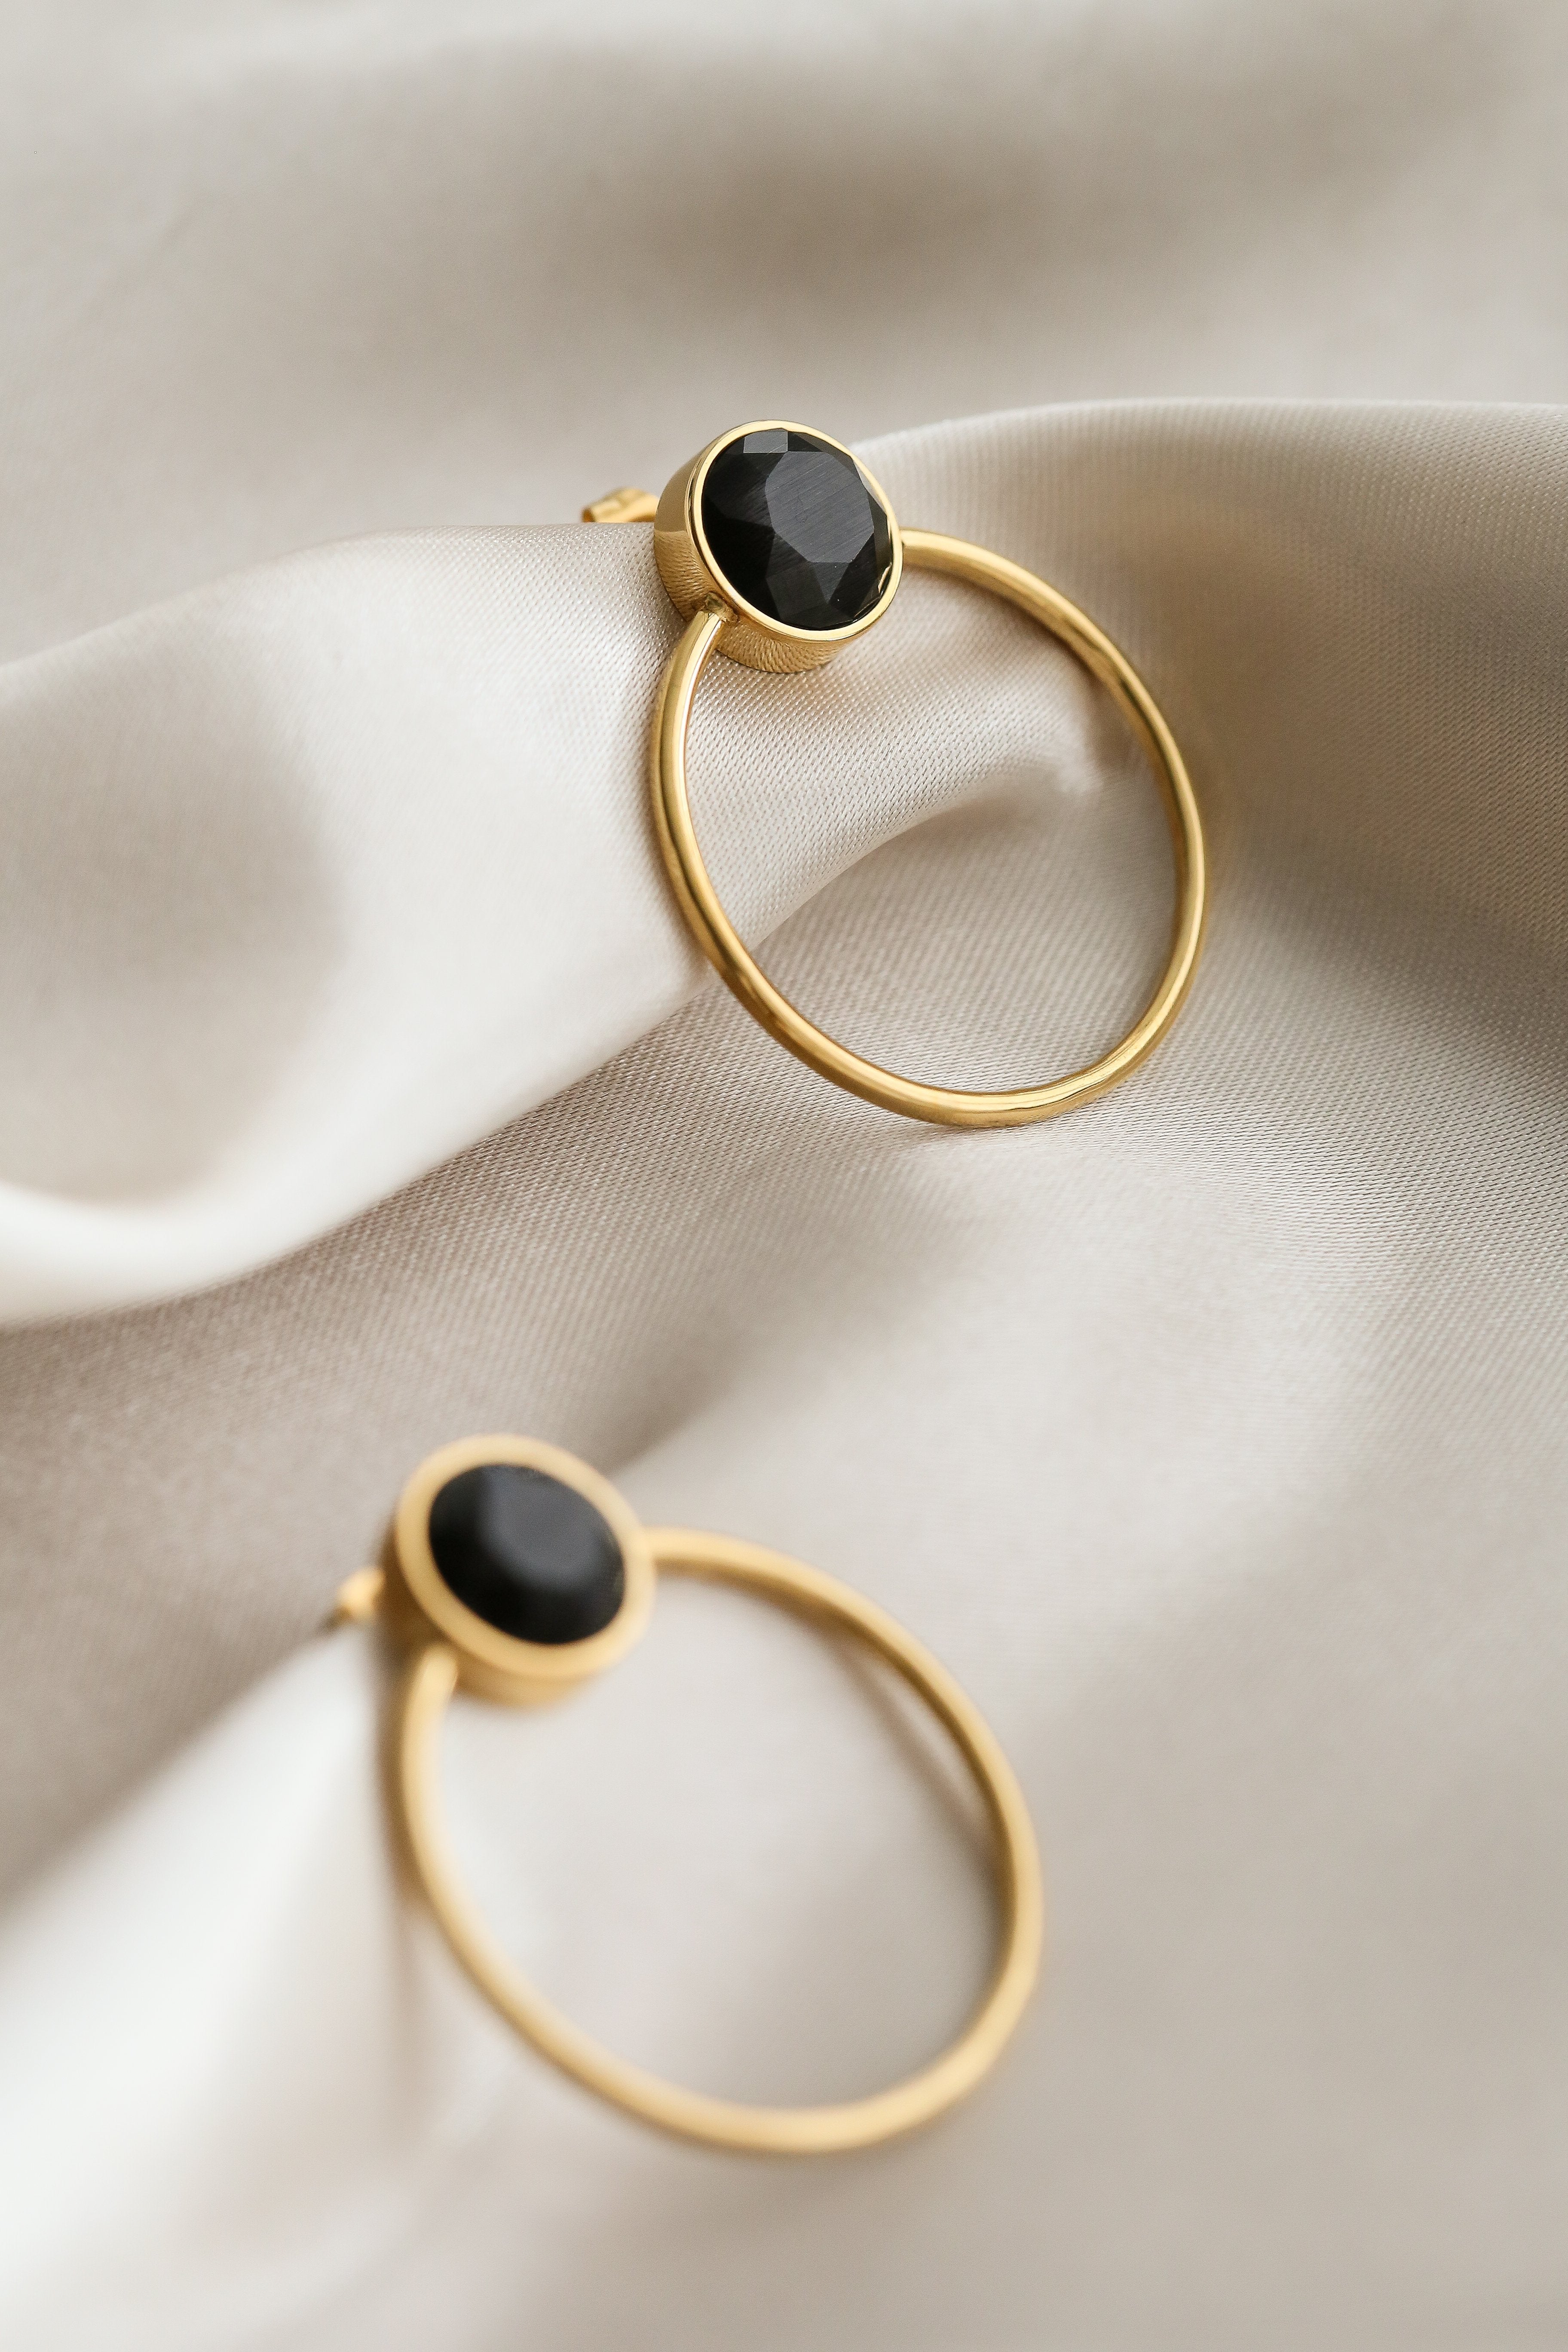 Dream Earrings - Boutique Minimaliste has waterproof, durable, elegant and vintage inspired jewelry